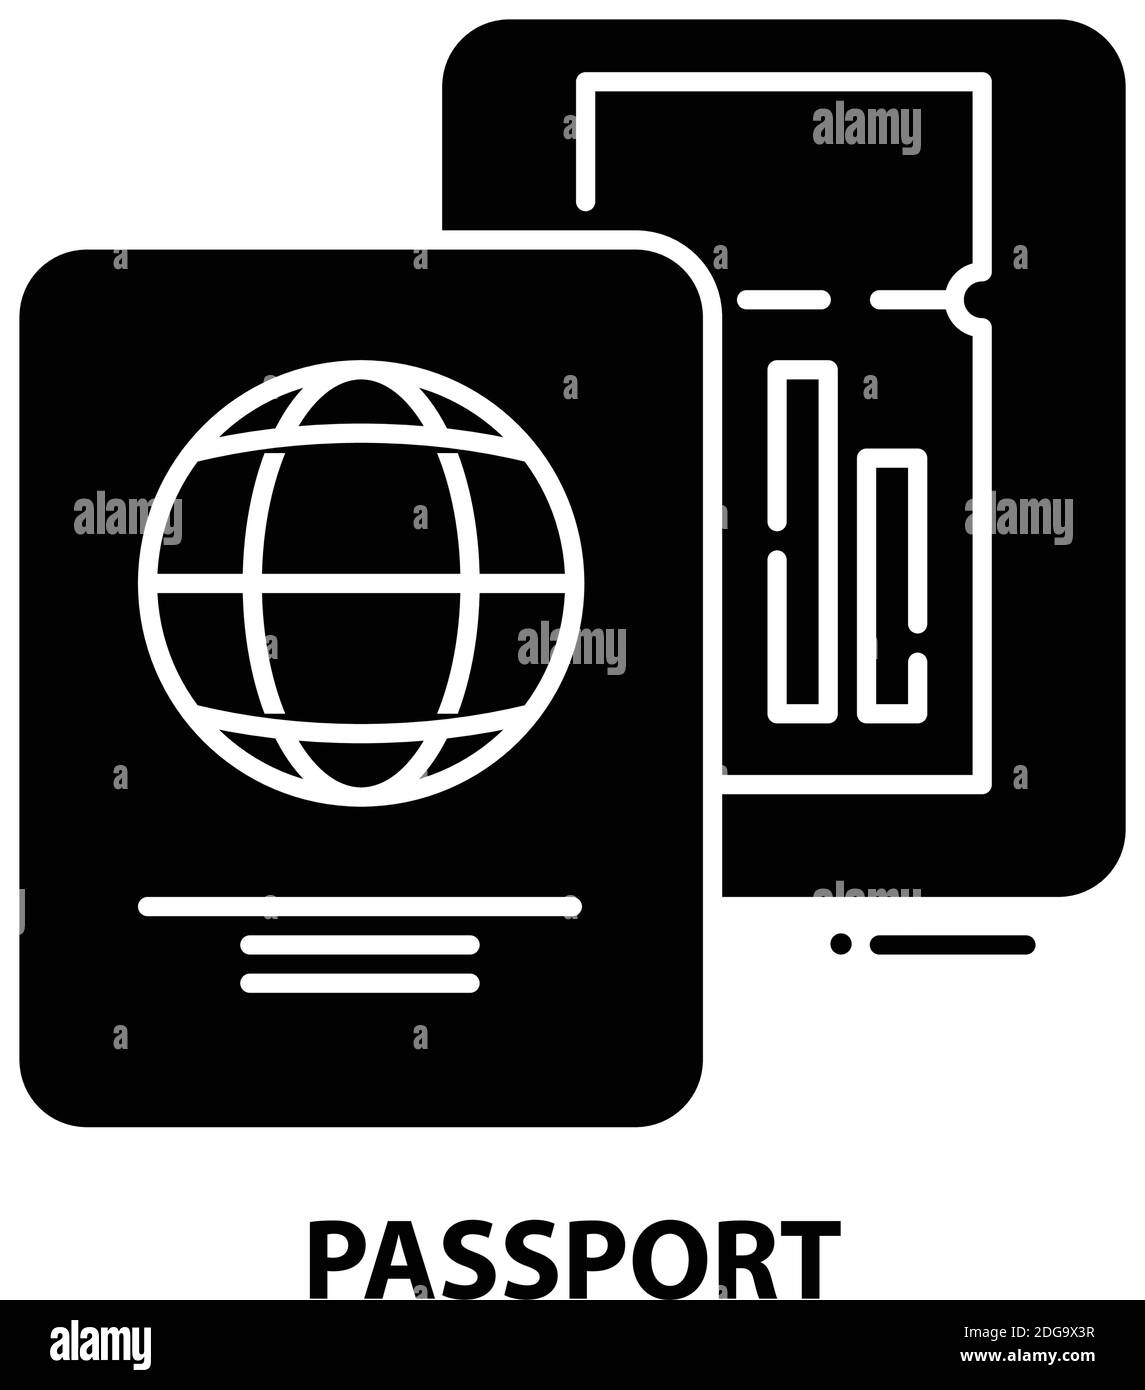 passport icon, black vector sign with editable strokes, concept illustration Stock Vector